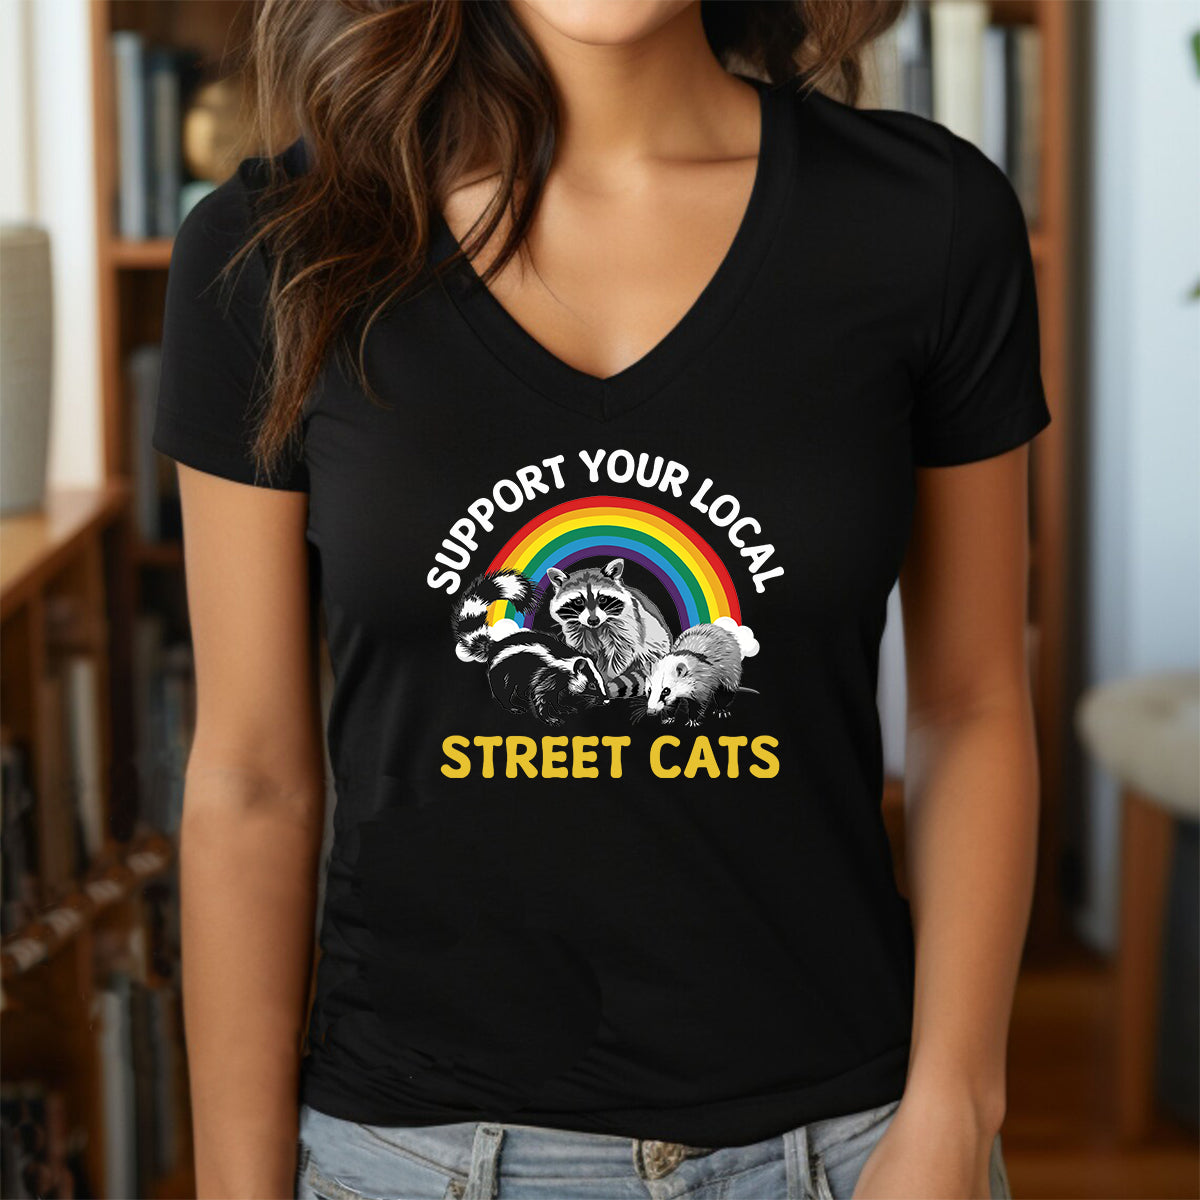 "Street Cats" Premium Midweight Ringspun Cotton T-Shirt - Mens/Womens Fits